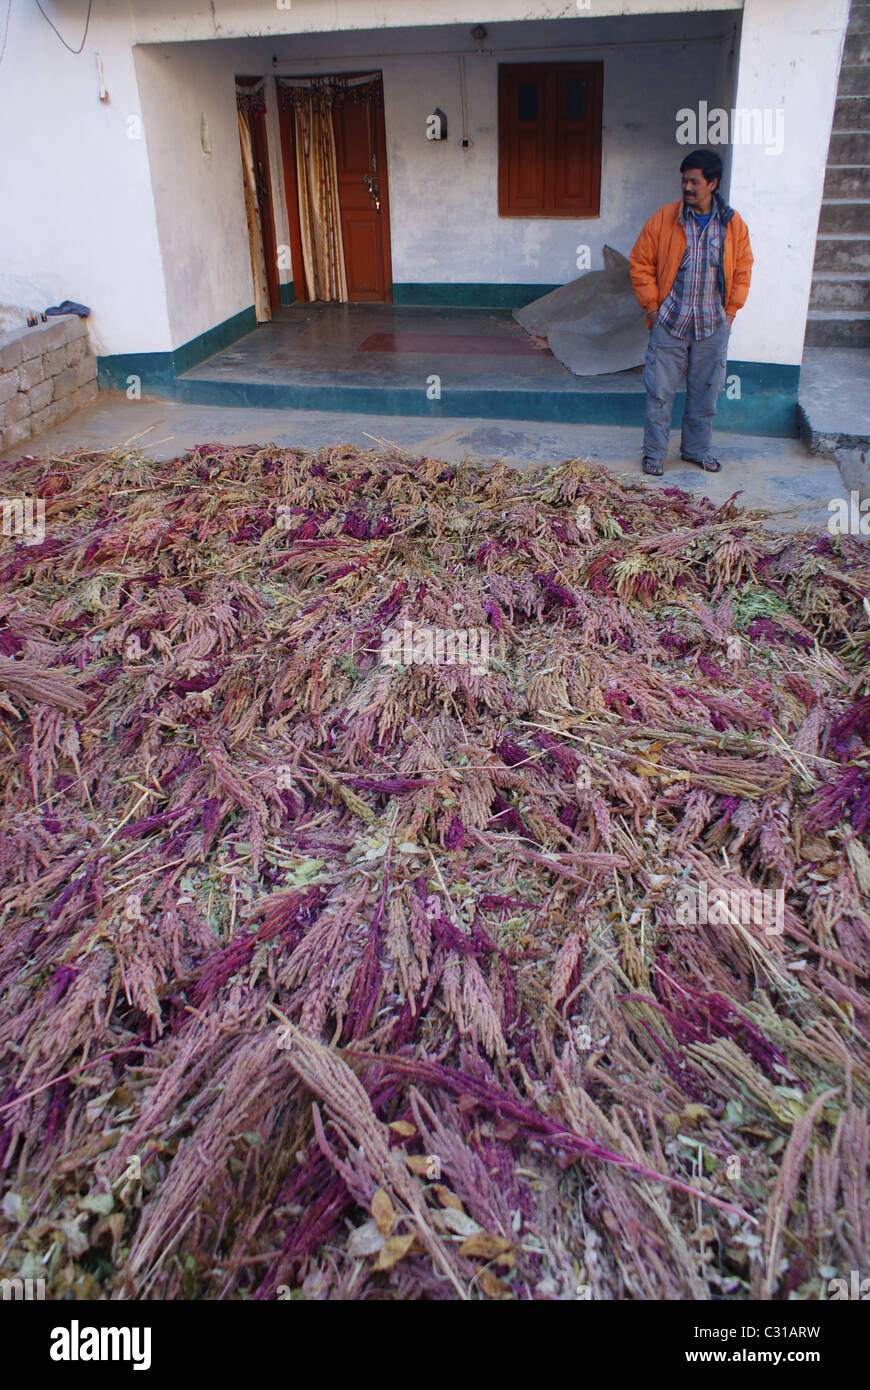 Garhwal Himalaya, India: Signor Butola ispeziona il amaranthus raccolto. Foto Stock